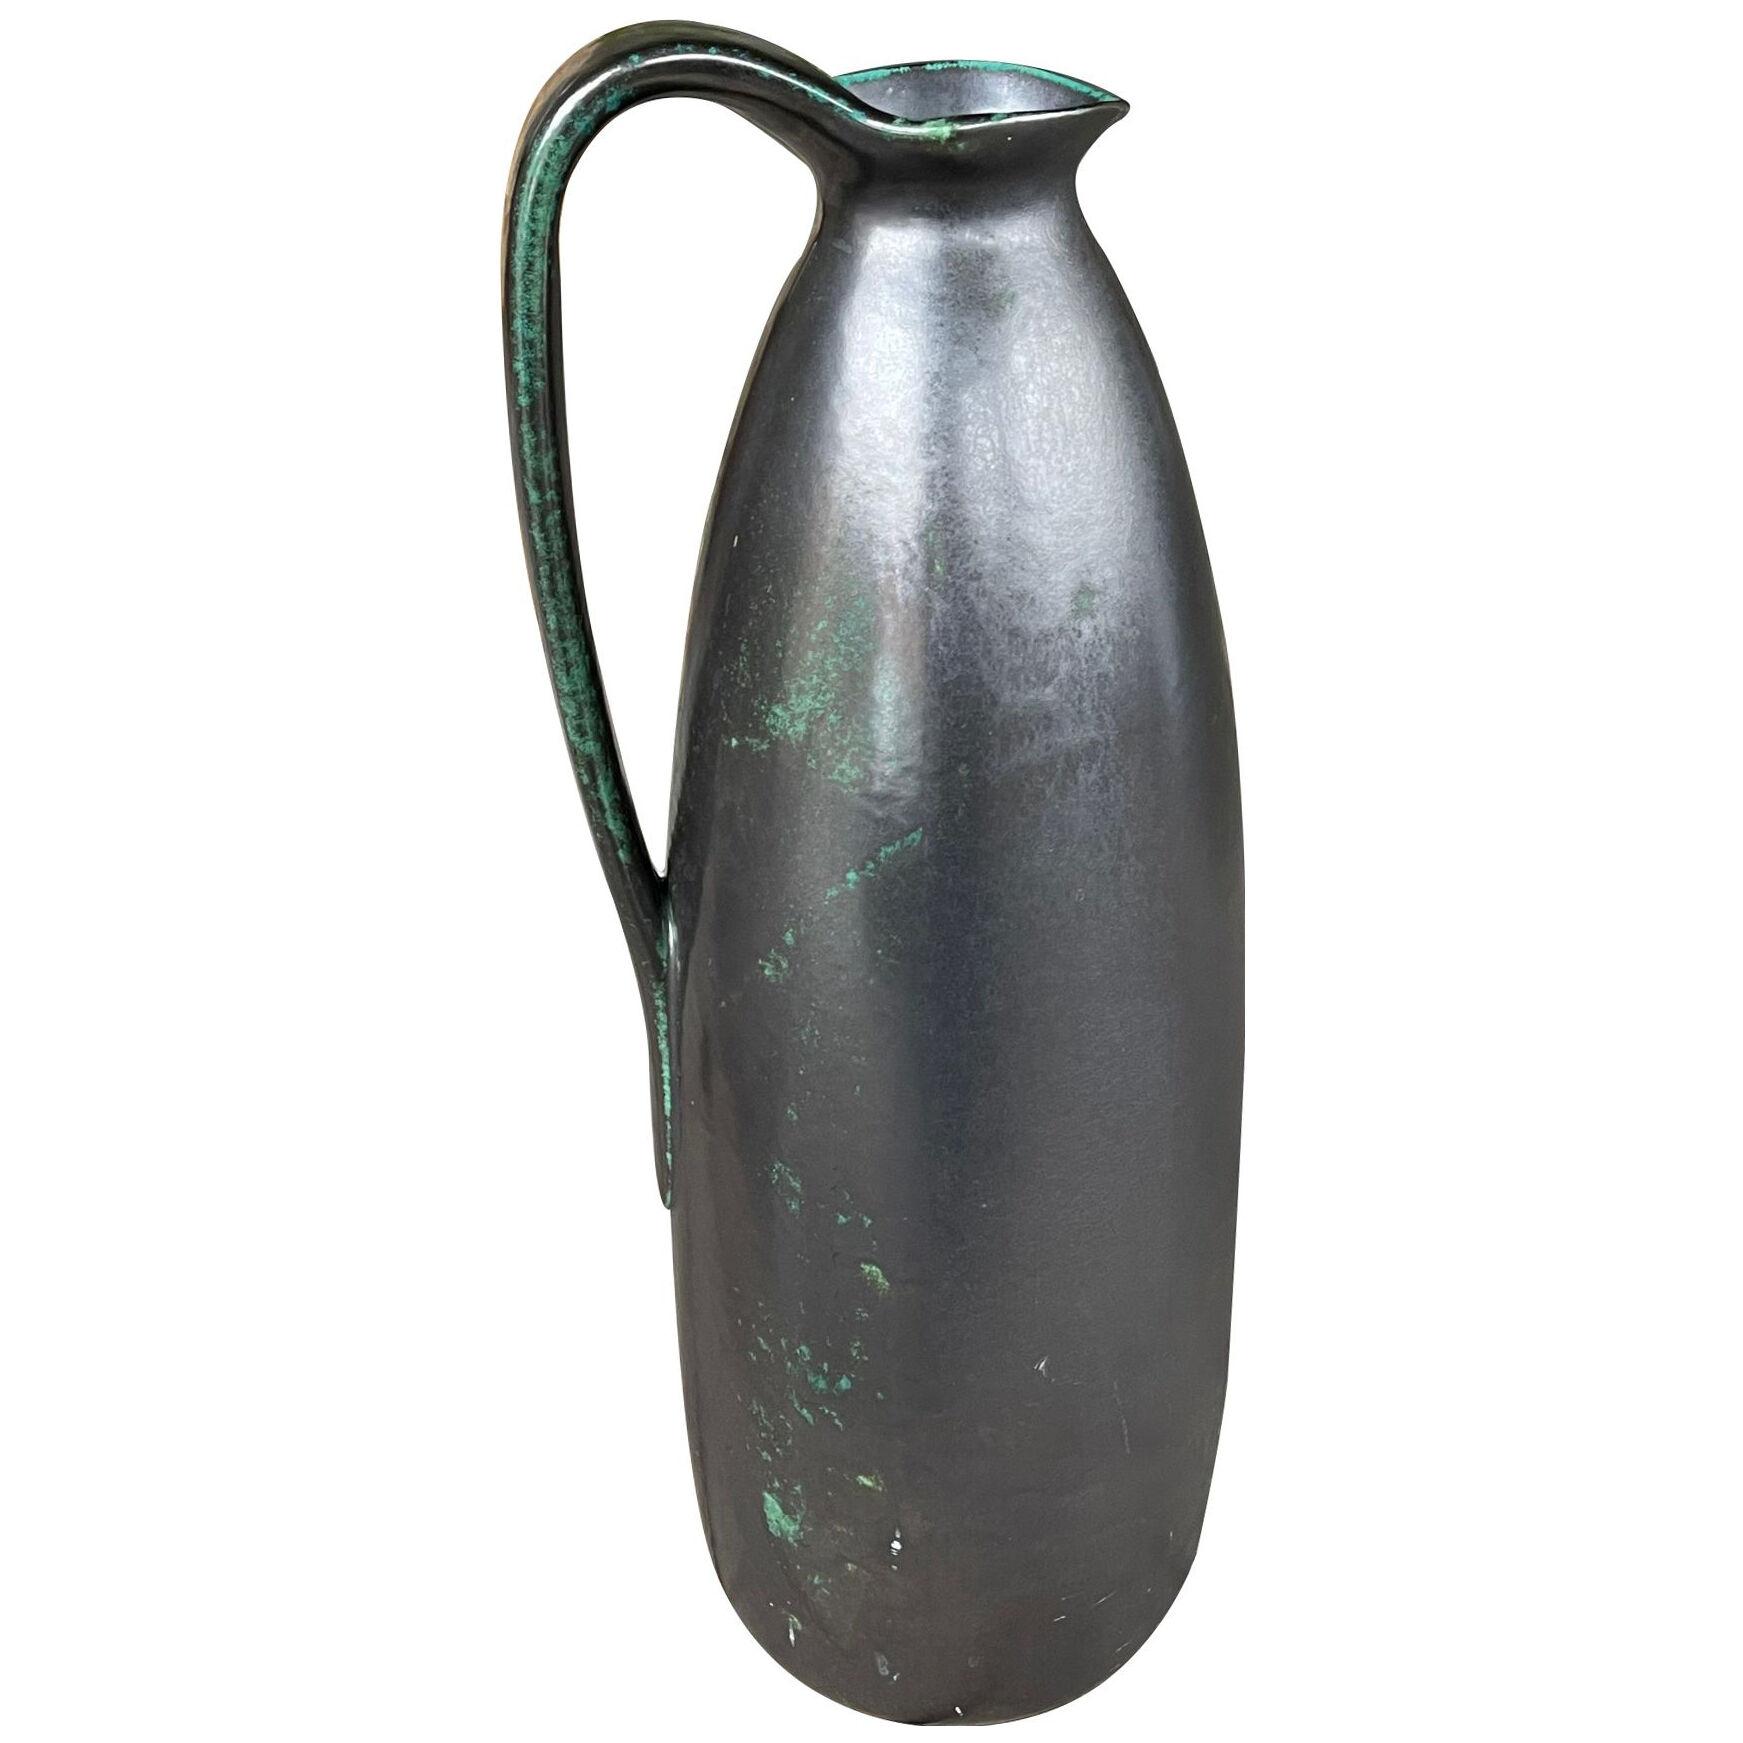 Impressively large 1960's ruscha pottery raku-glazed ewer